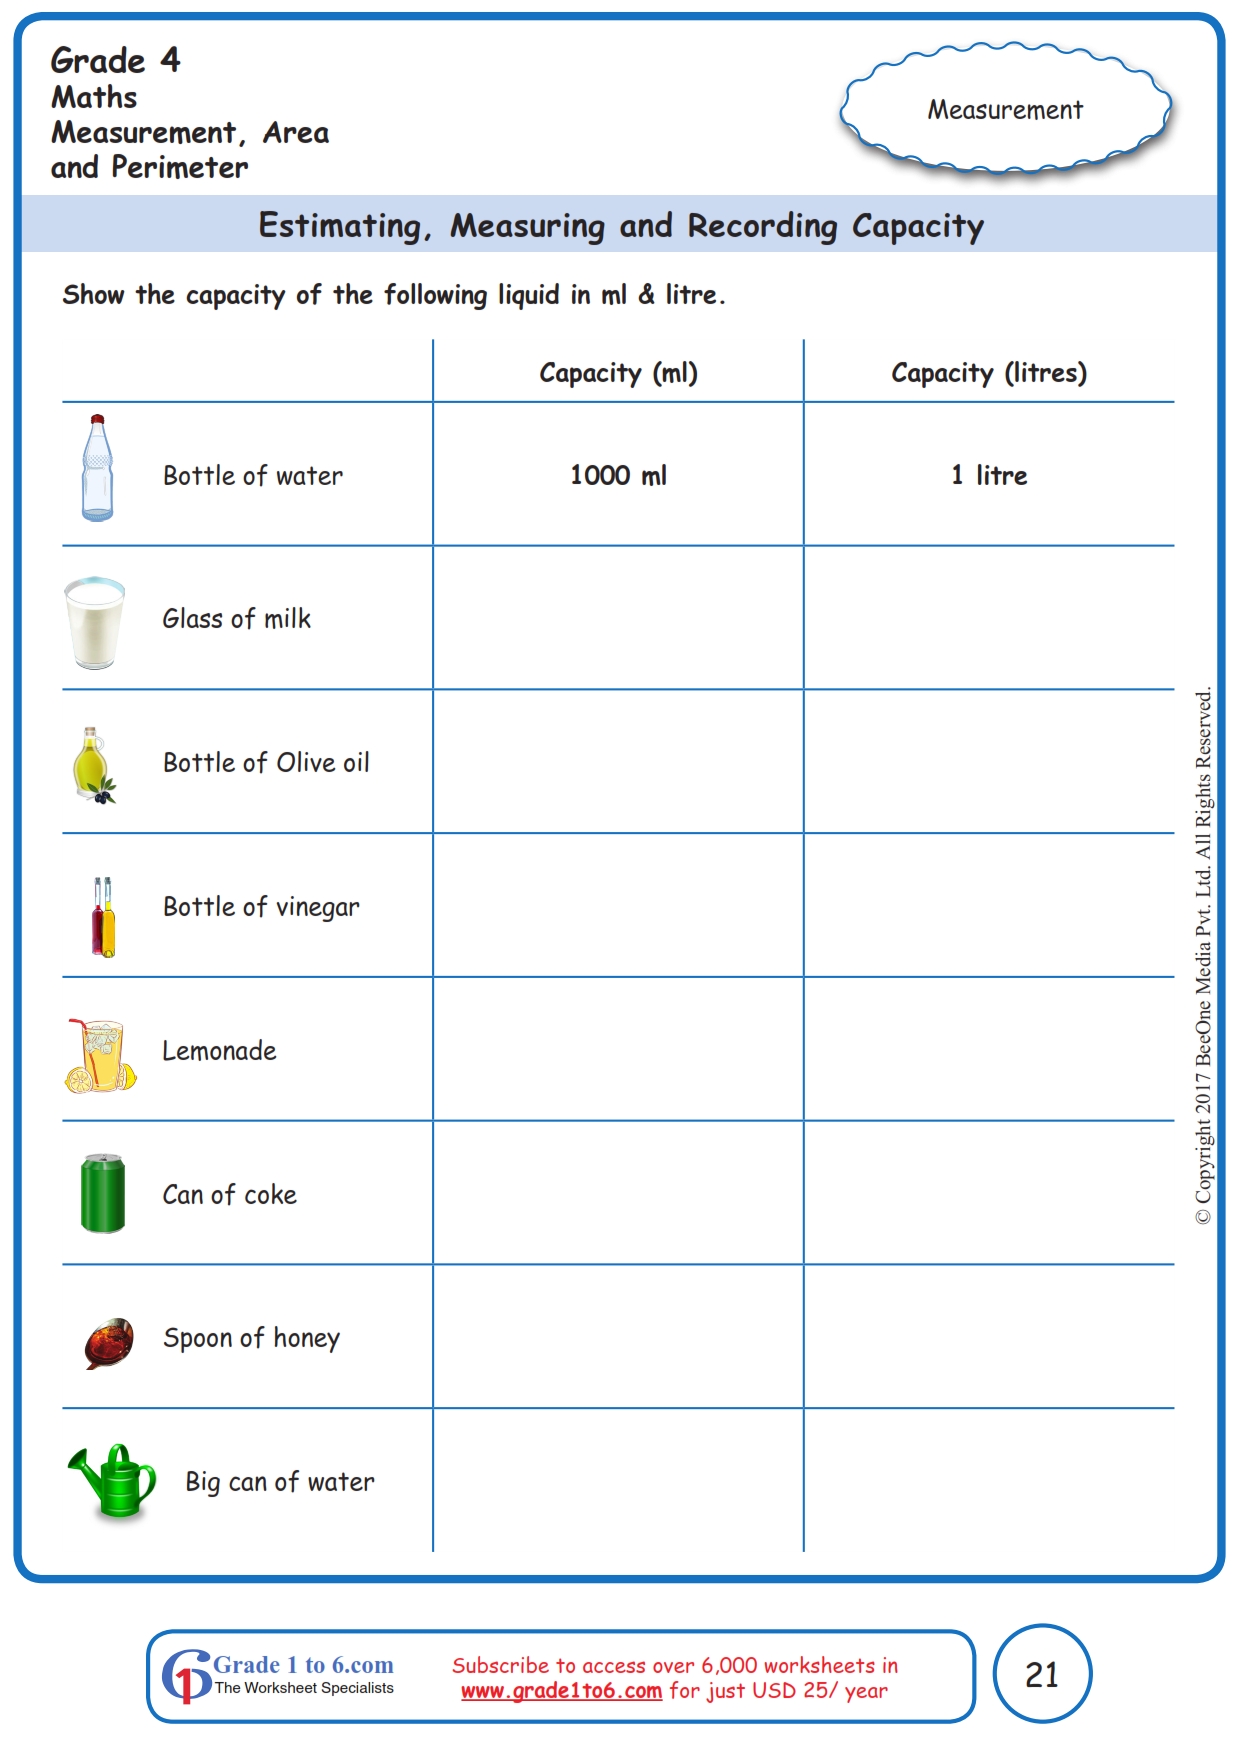 grade 4 measurement worksheets www grade1to6 com